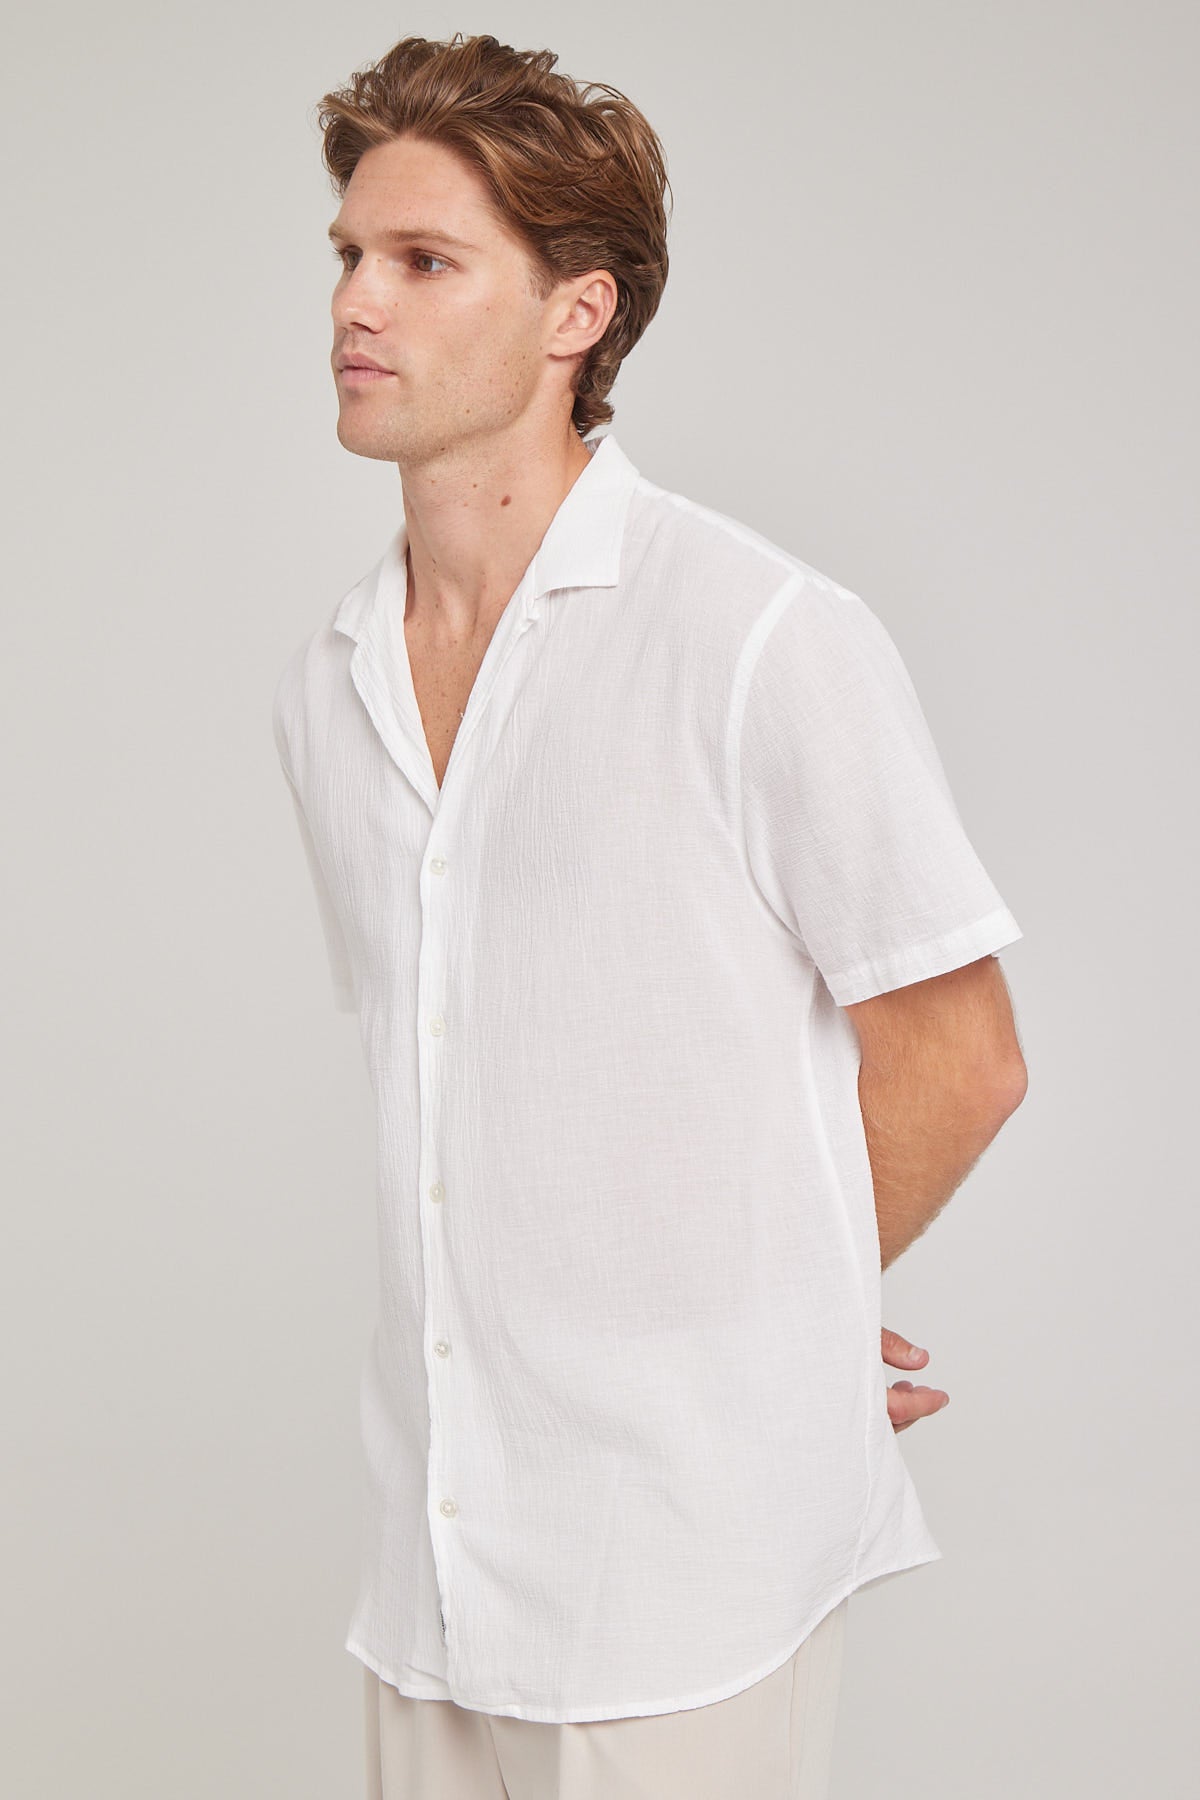 Academy Brand Bedford Shirt White – Universal Store